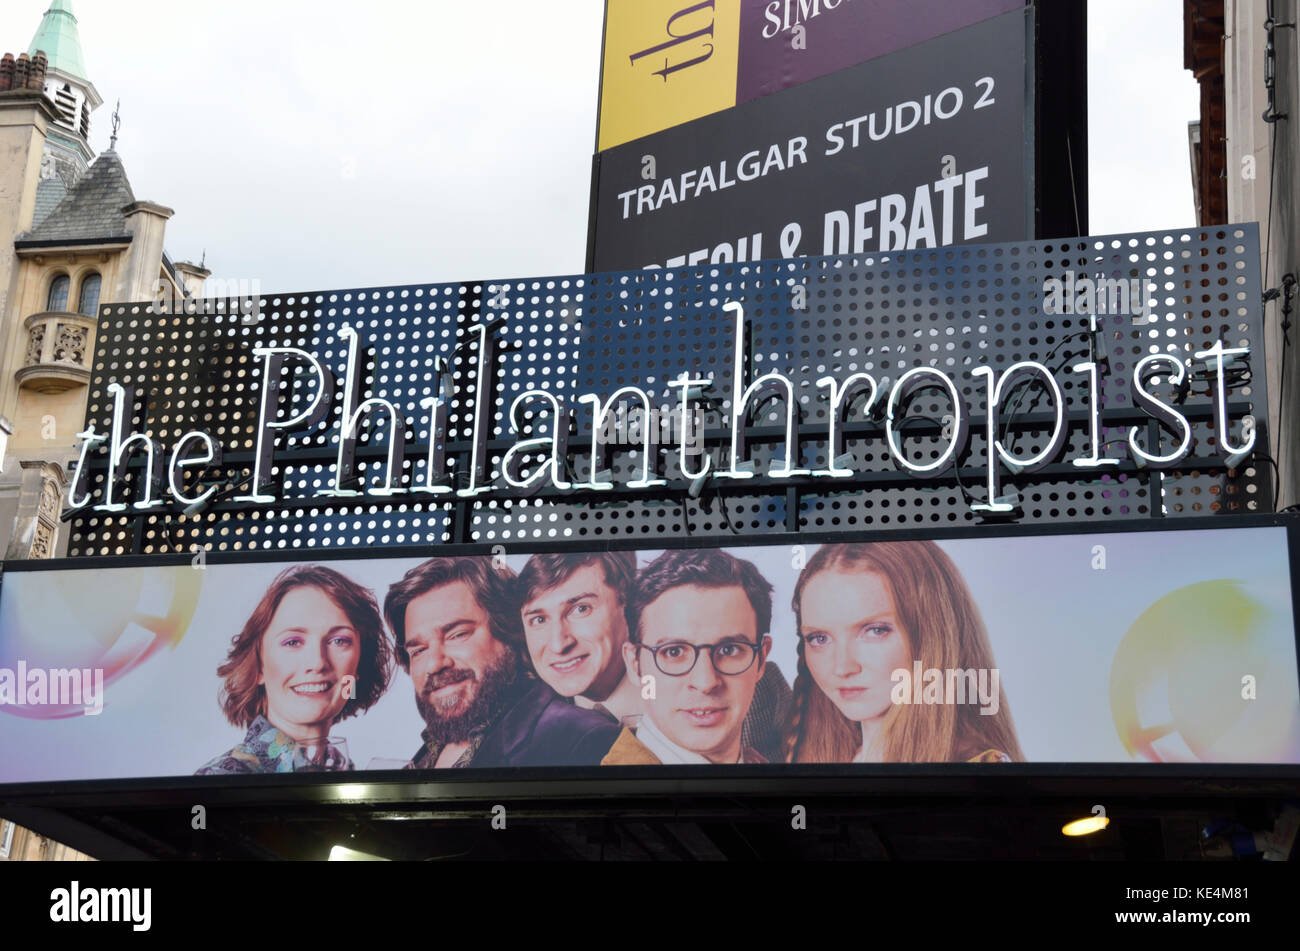 Der Philanthrop Billboard außerhalb Trafalgar studios Theater, London, UK. Stockfoto